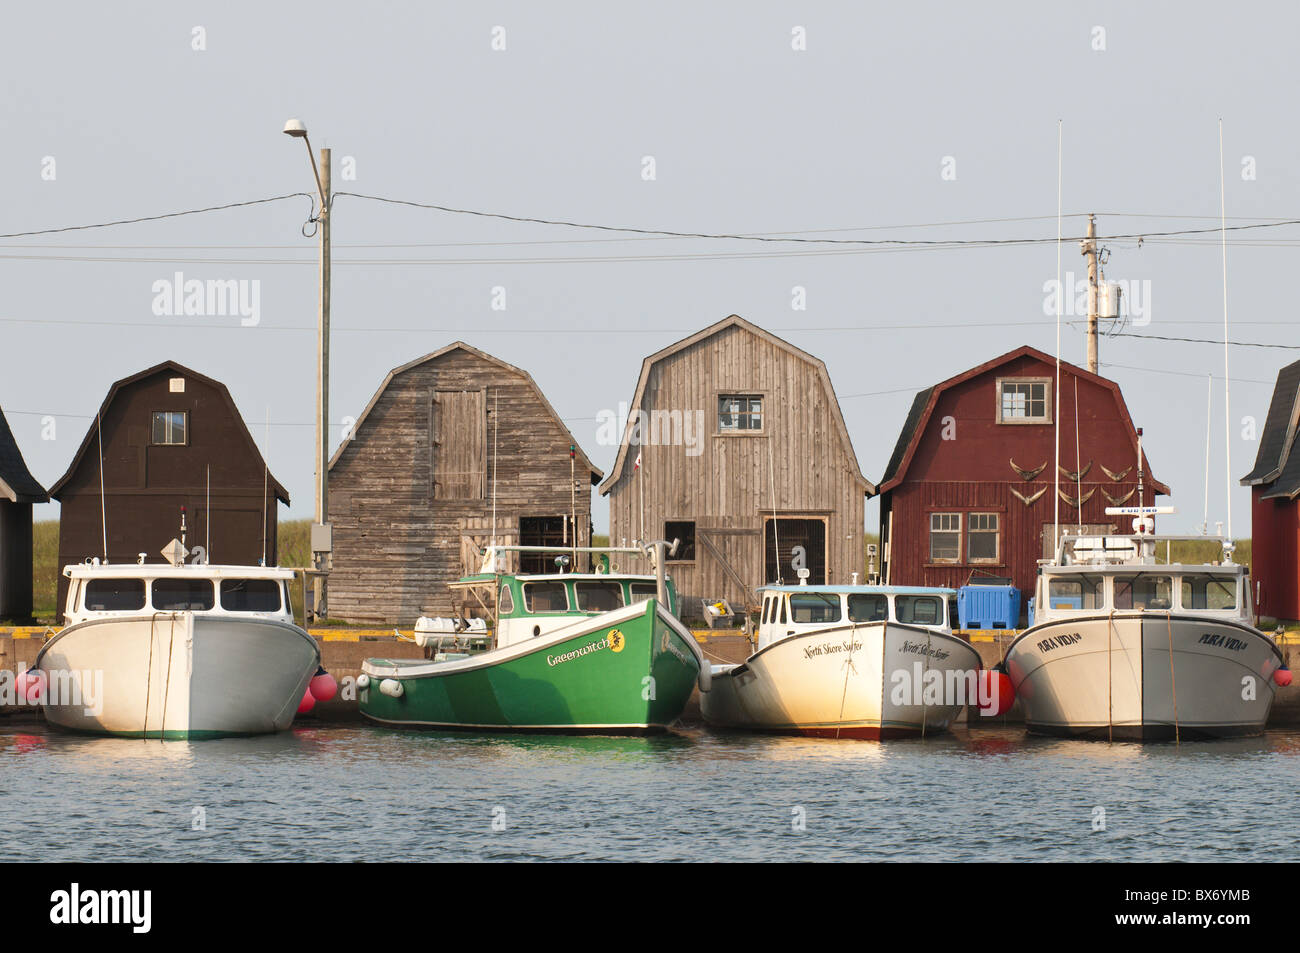 https://c8.alamy.com/comp/BX6YMB/fishing-boats-in-malpeque-harbour-malpeque-prince-edward-island-canada-BX6YMB.jpg